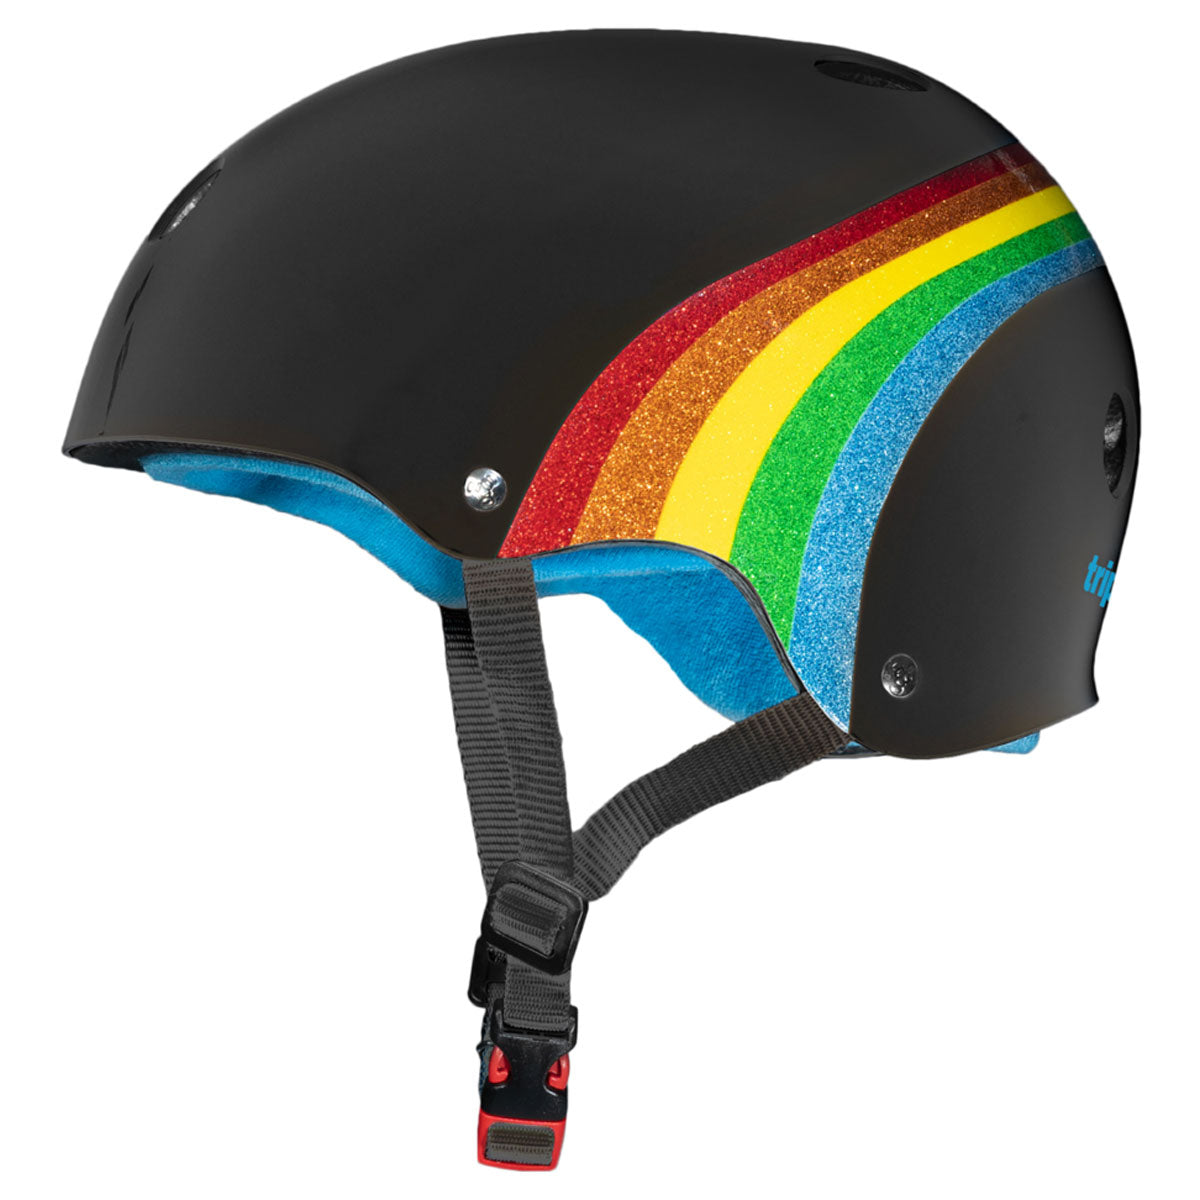 Triple Eight Certified Sweatsaver Helmet - Black Gloss/Rainbow image 1